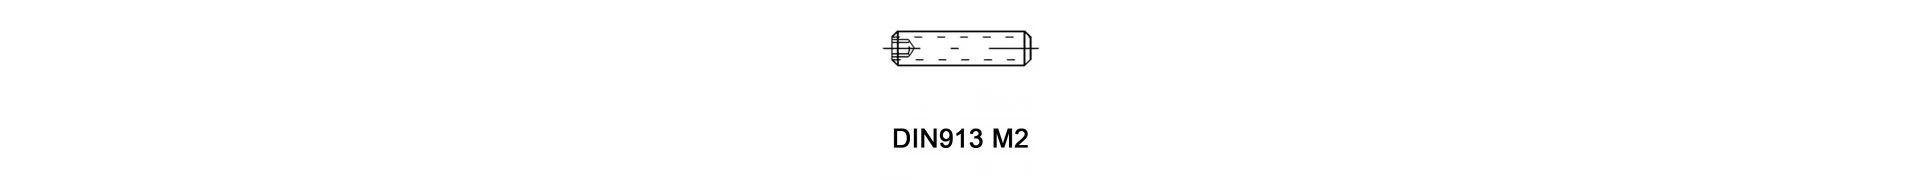 DIN913 M2